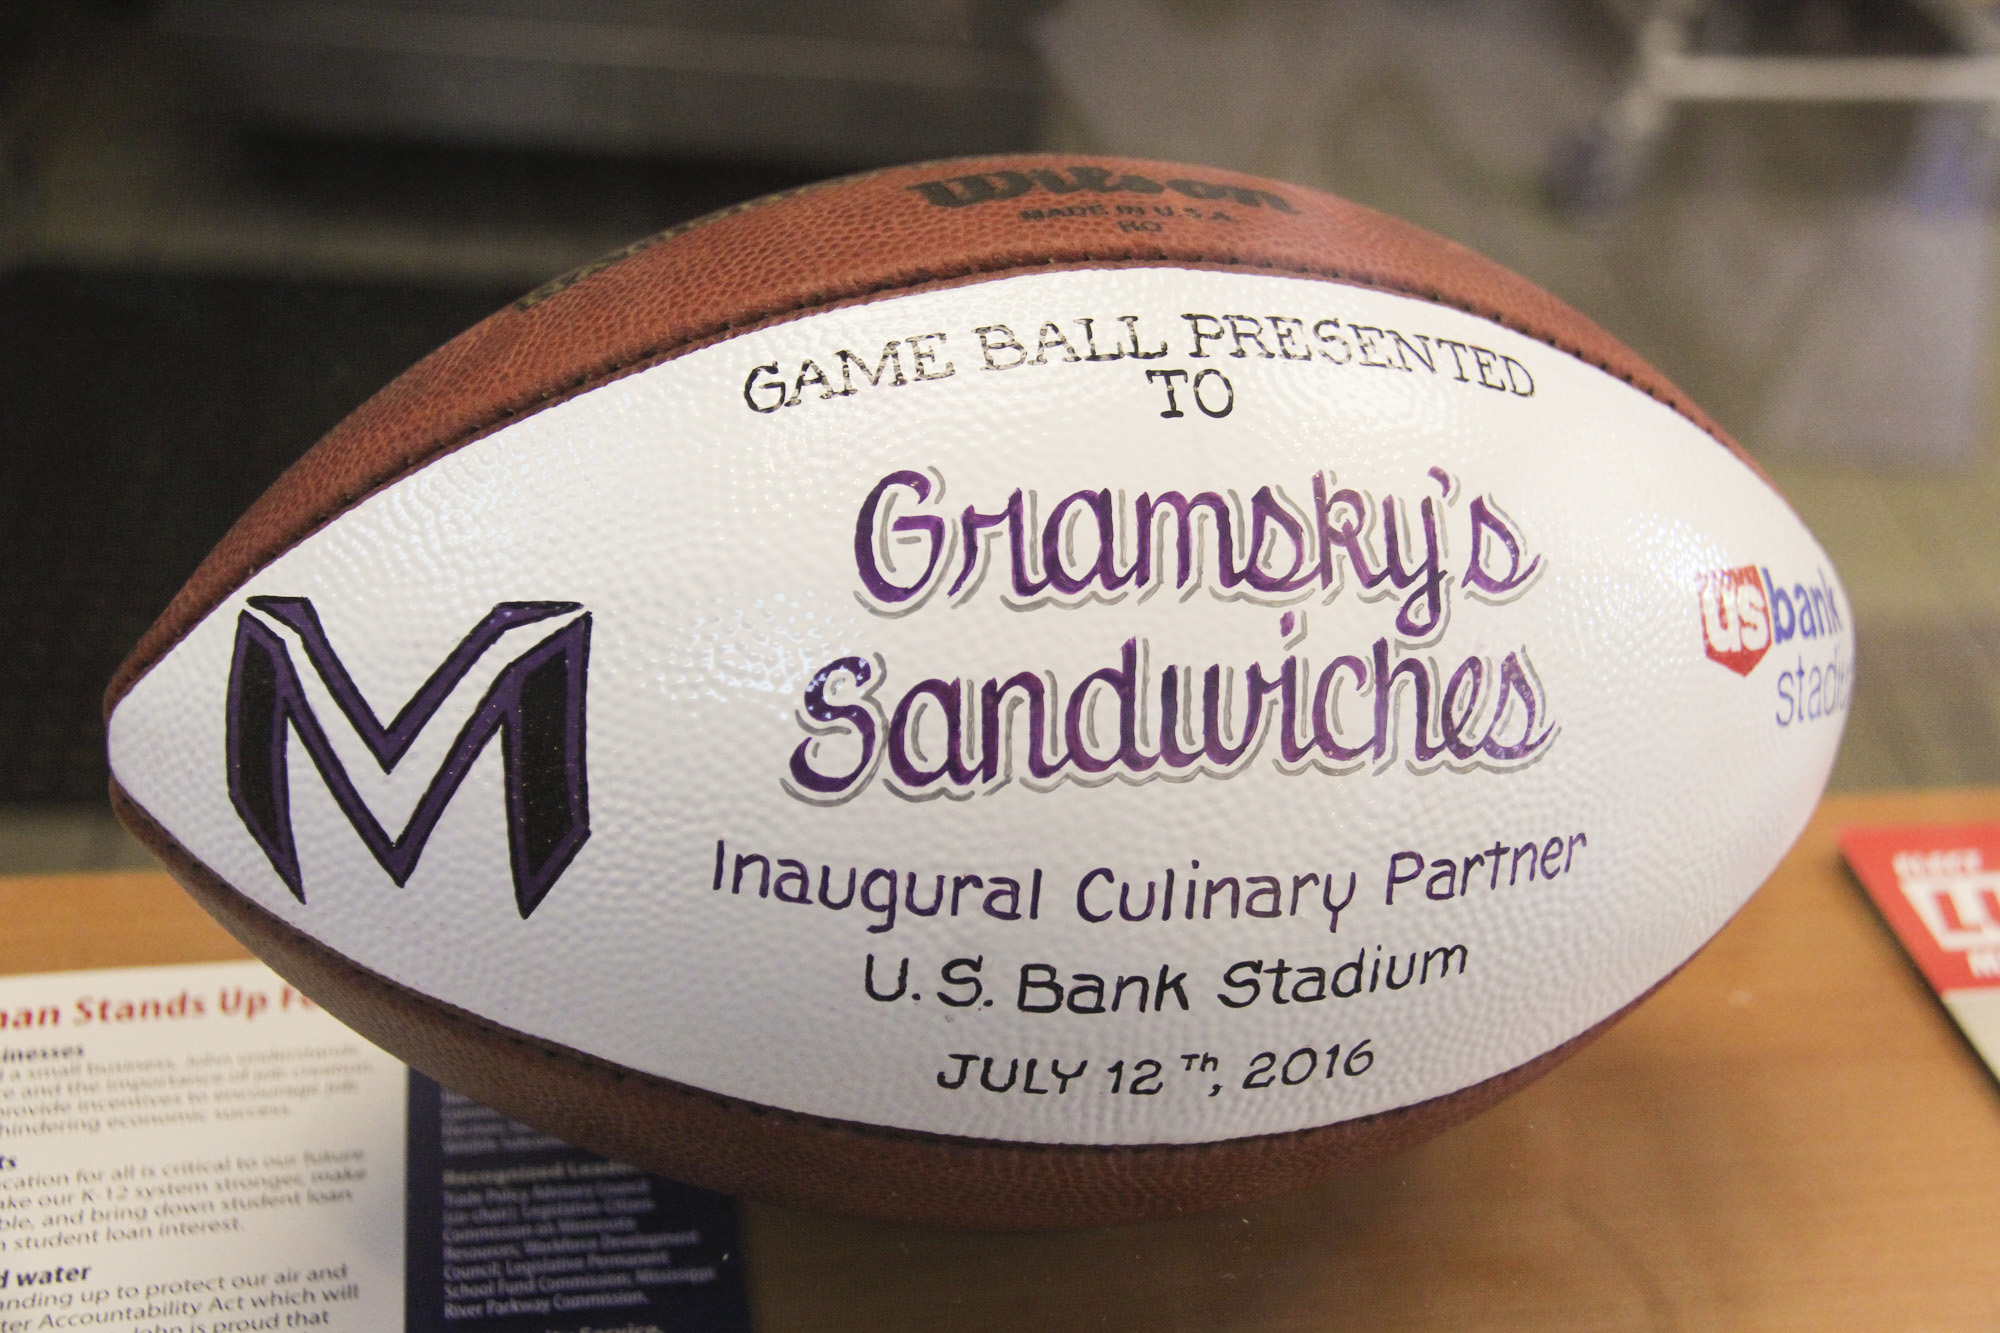 Game ball presented to Gramsky's as an inaugural partner at U.S. Bank stadium